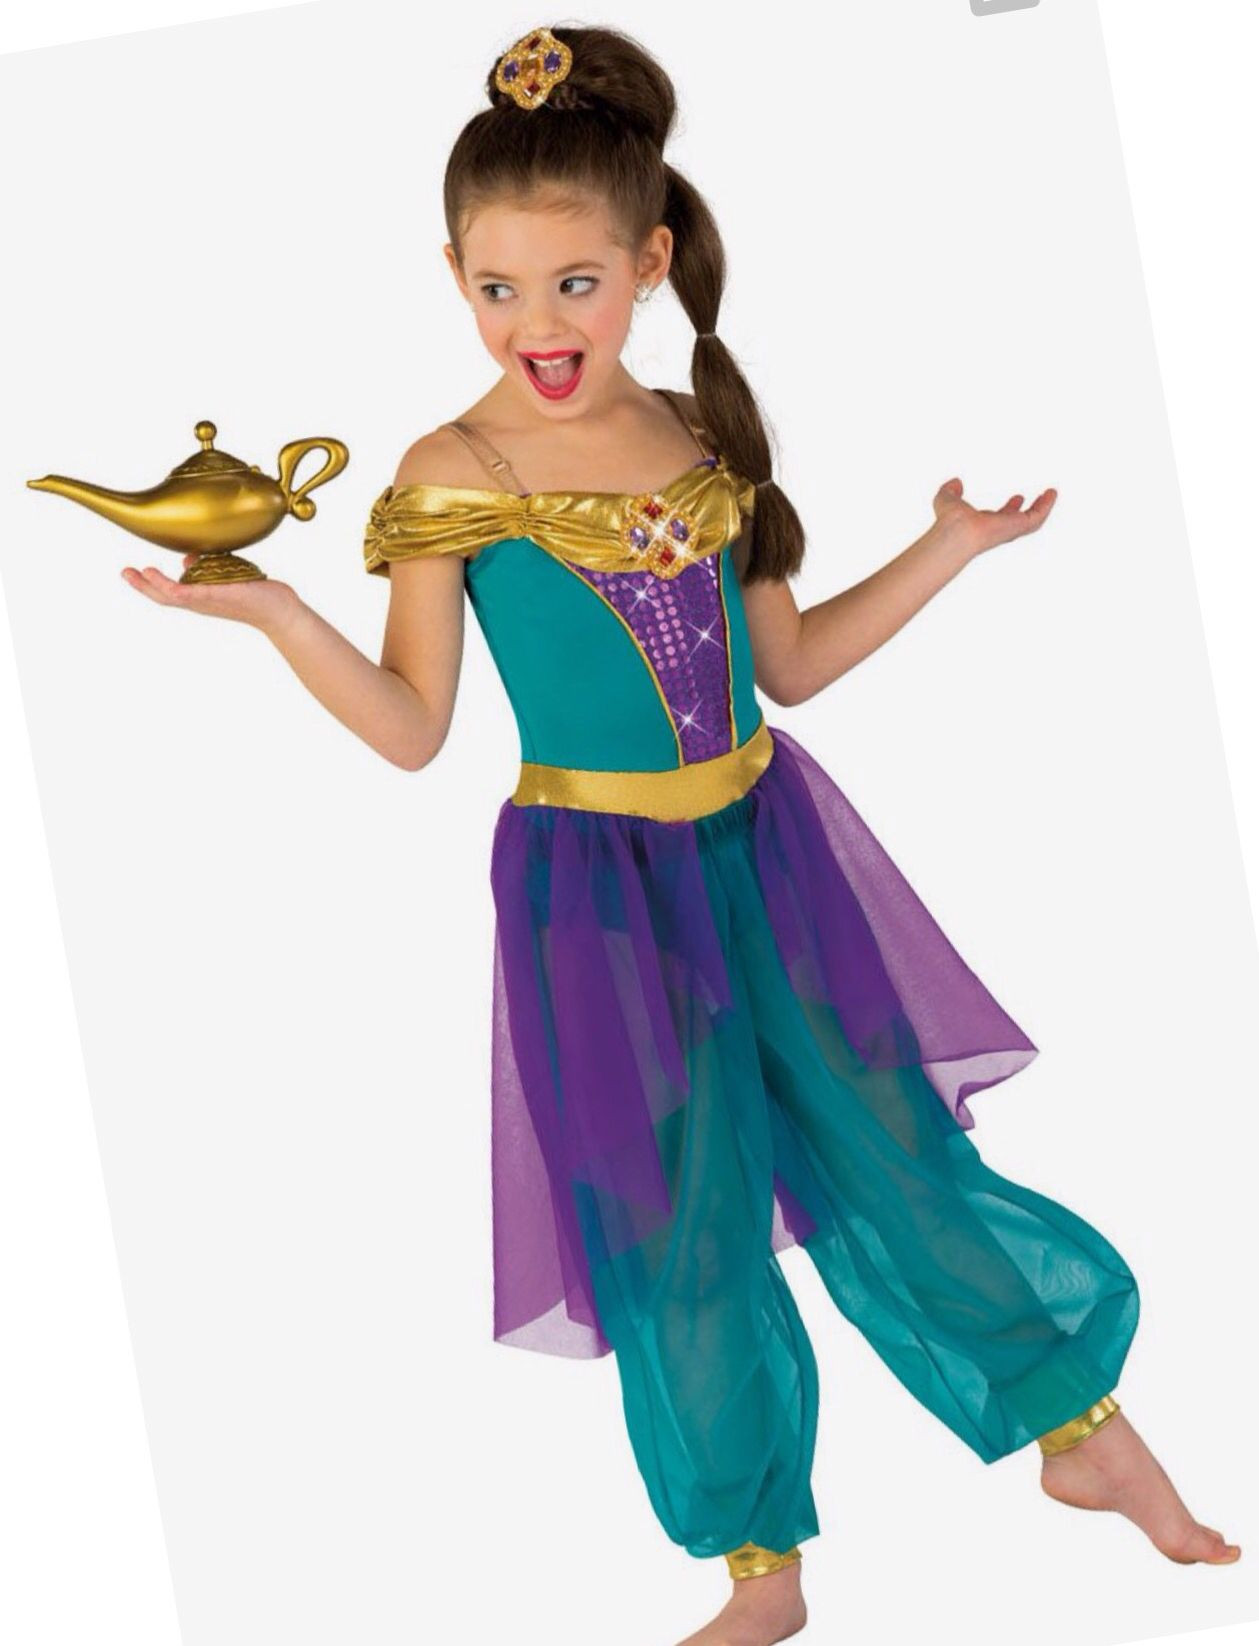 Genie Costume DIY
 Genie costume costumes Pinterest